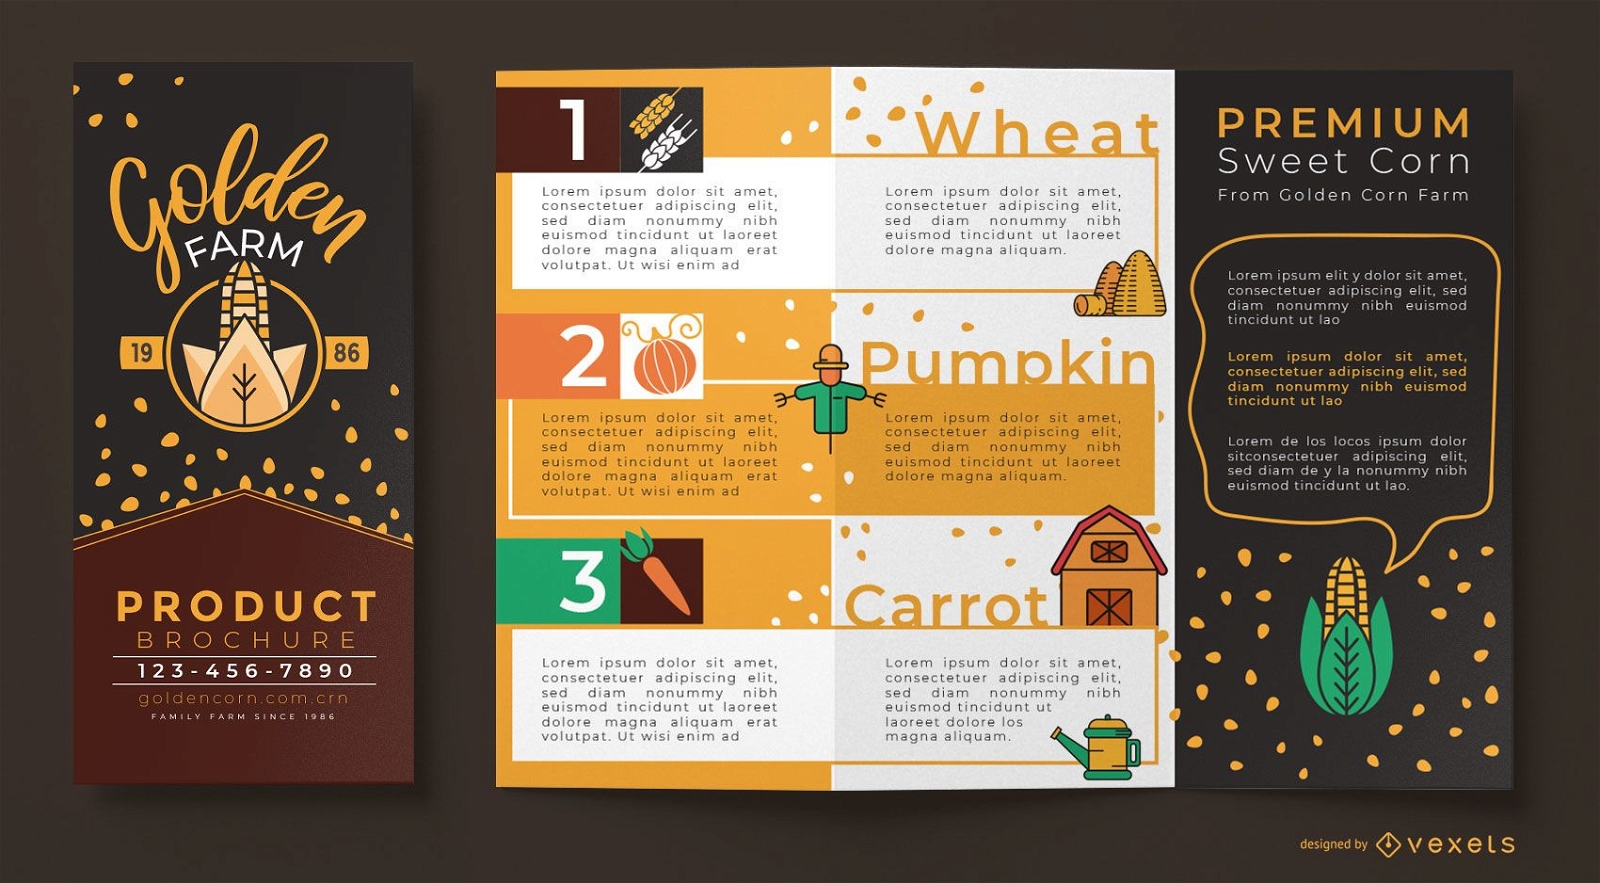 Golden corn farm brochure template